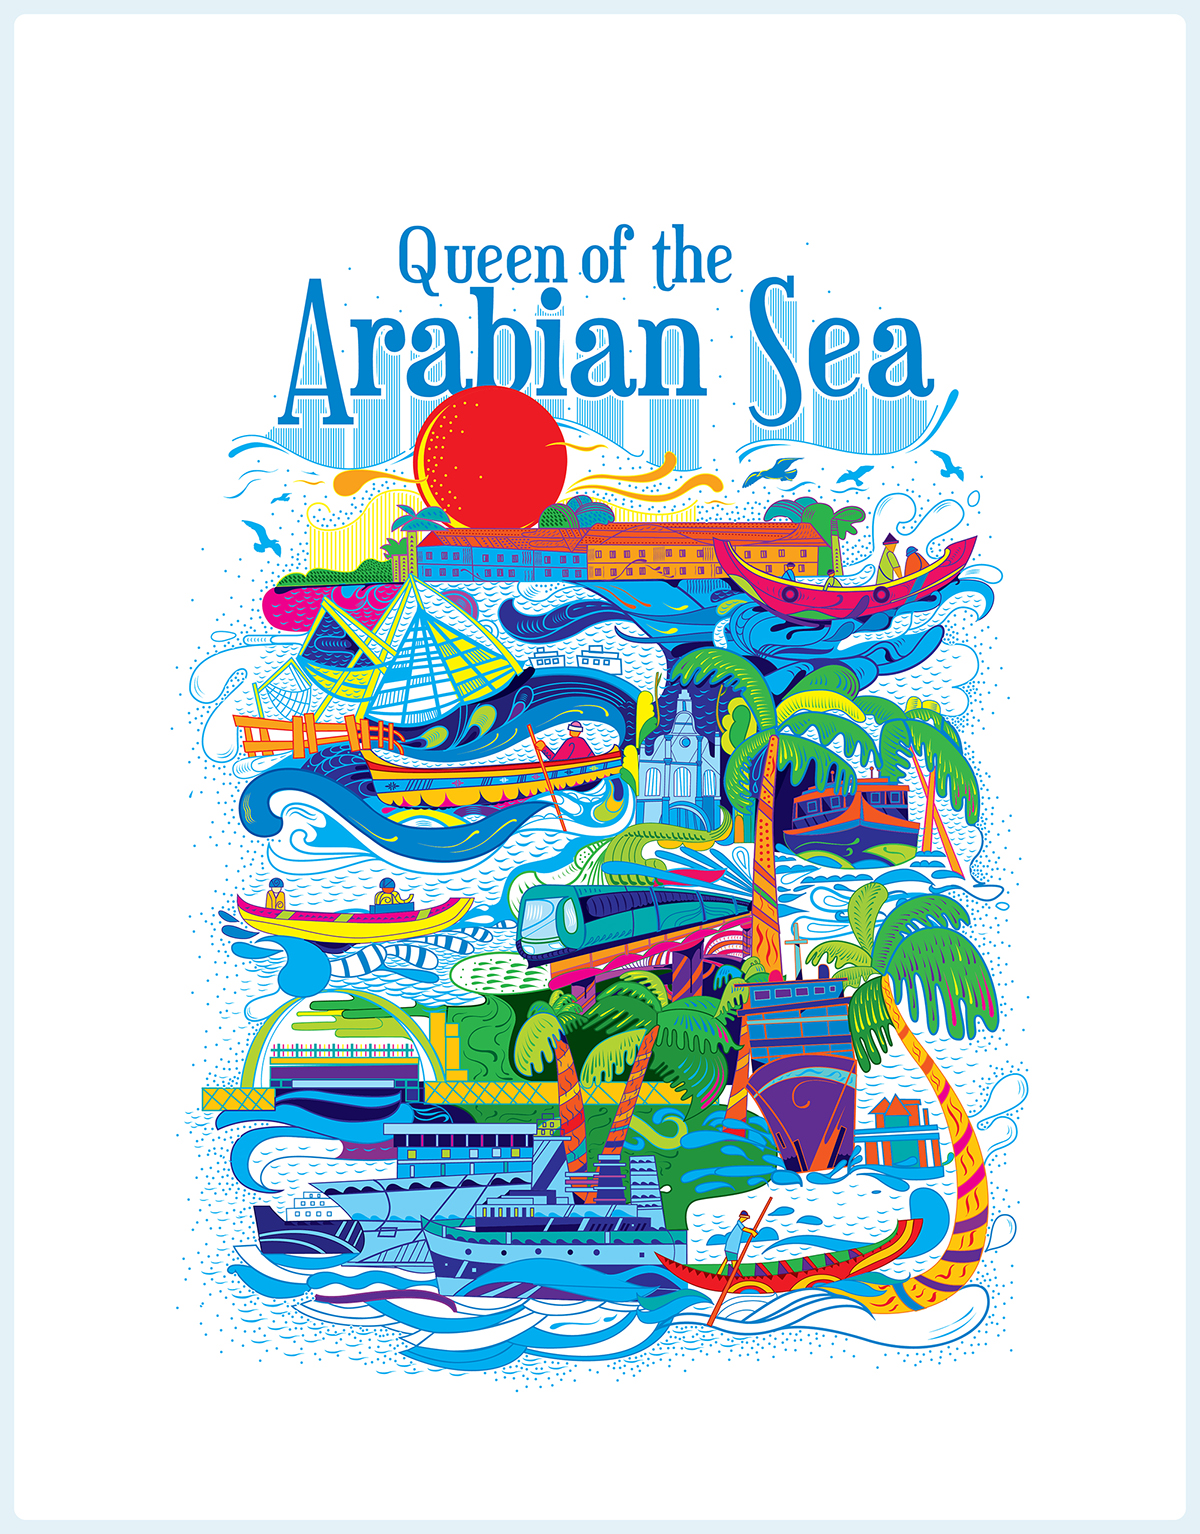 Kerala Blog Express - Trip of a Lifetime by Kerala Tourism | Queen of Arabian Sea by Stark Communications Pvt Ltd